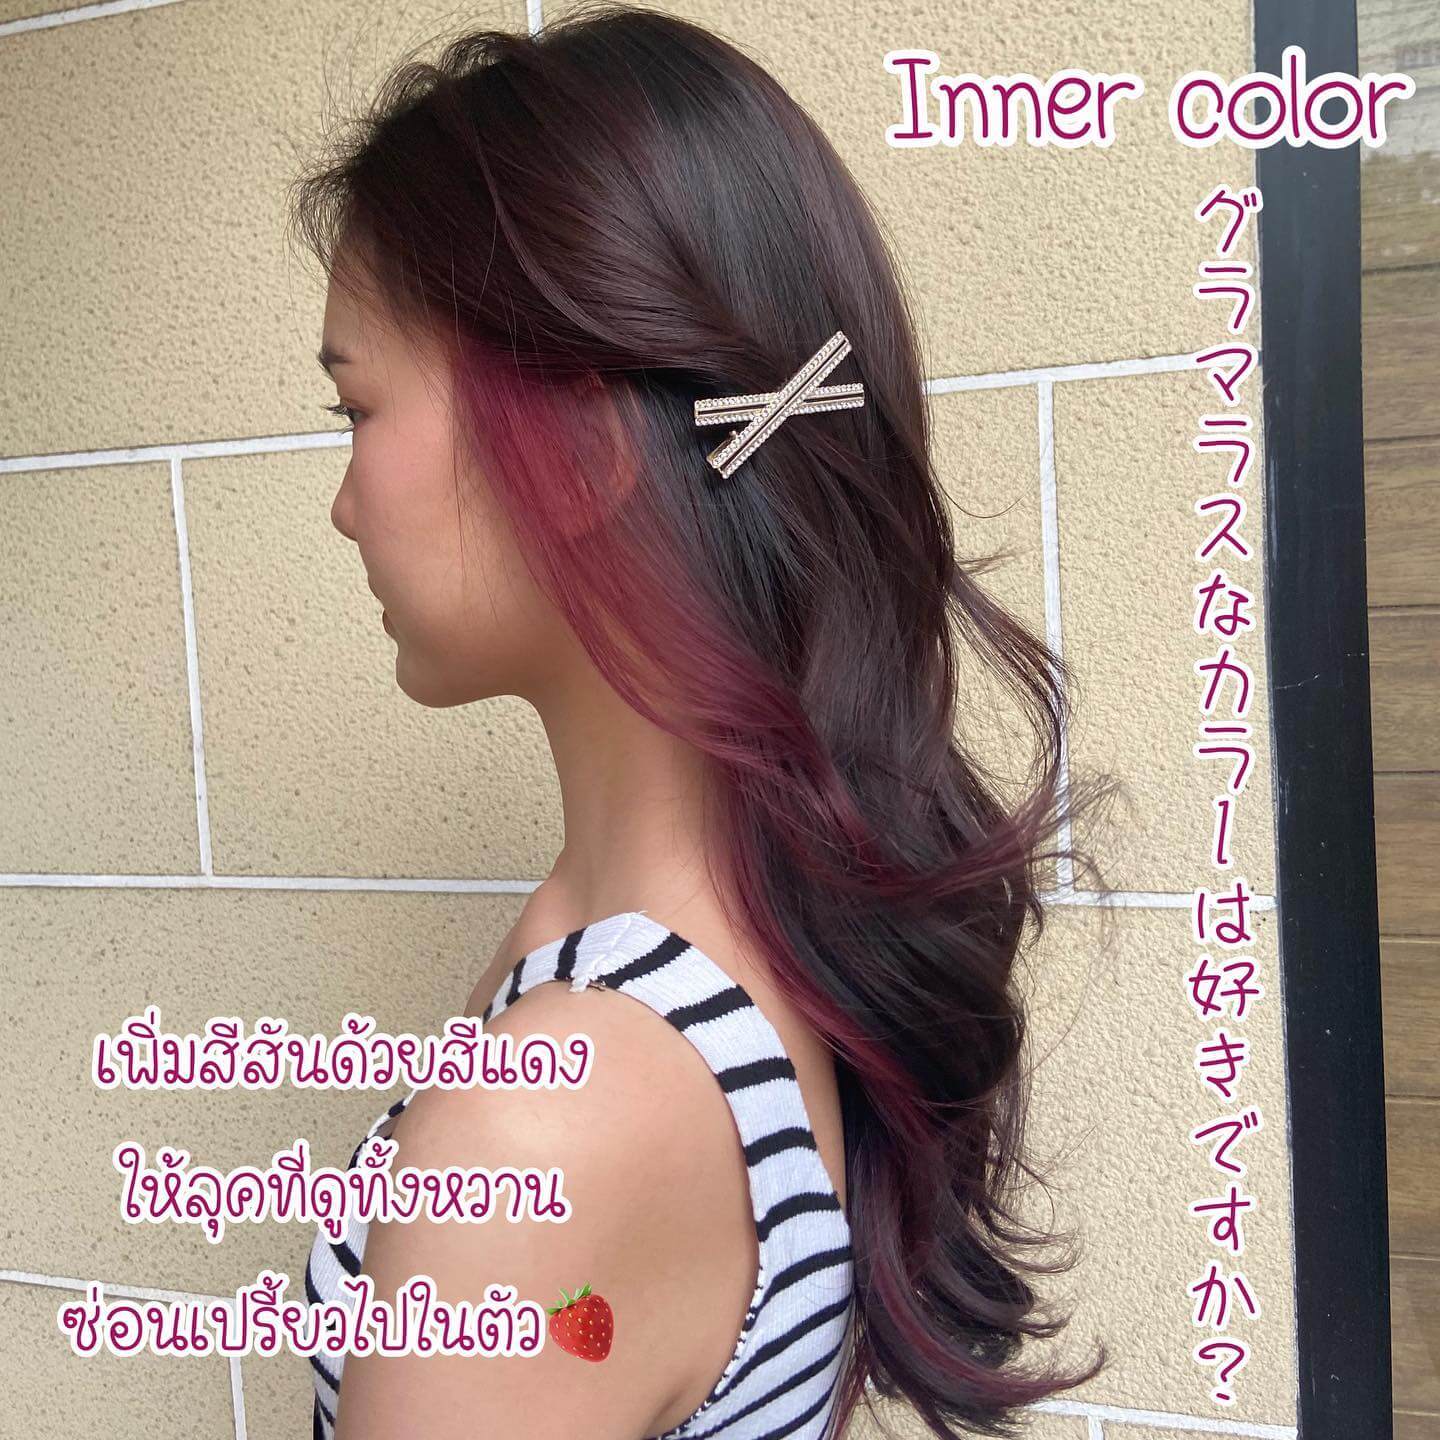 Inner color
ลุคที่ทั้งหวานซ่อนเปรี้ยวไปในตัว โดยการเพิ่มสีสันให้เส้นผมด้วย สีแดง️ไม่จำเป็นต้องทำสีทั้งหัว แค่เพิ่มอินเนอร์ข้างใน ก็ดูมีเสน่ห์เพิ่มขึ้นแล้วค่ะ🥰  Stylist Yamada  YAMS hair&cafe  For booking/ご予約、お問い合わせ↓
LINE ID:@qai5573z
Tel:02-163-4973  Business hours/営業時間↓
9:00 - 18:00
Closed on Wednesday,2nd & 4th Thursday  #ร้านทำผมญี่ปุ่น #YAMShaircafe #ตัดผมญี่ปุ่น #ยืดผมญี่ปุ่น #ดัดผมญี่ปุ่น #ร้านทำผม #バンコク生活 #バンコク在住 #バンコク暮らし #バンコク子連れ美容室 #バンコク美容室